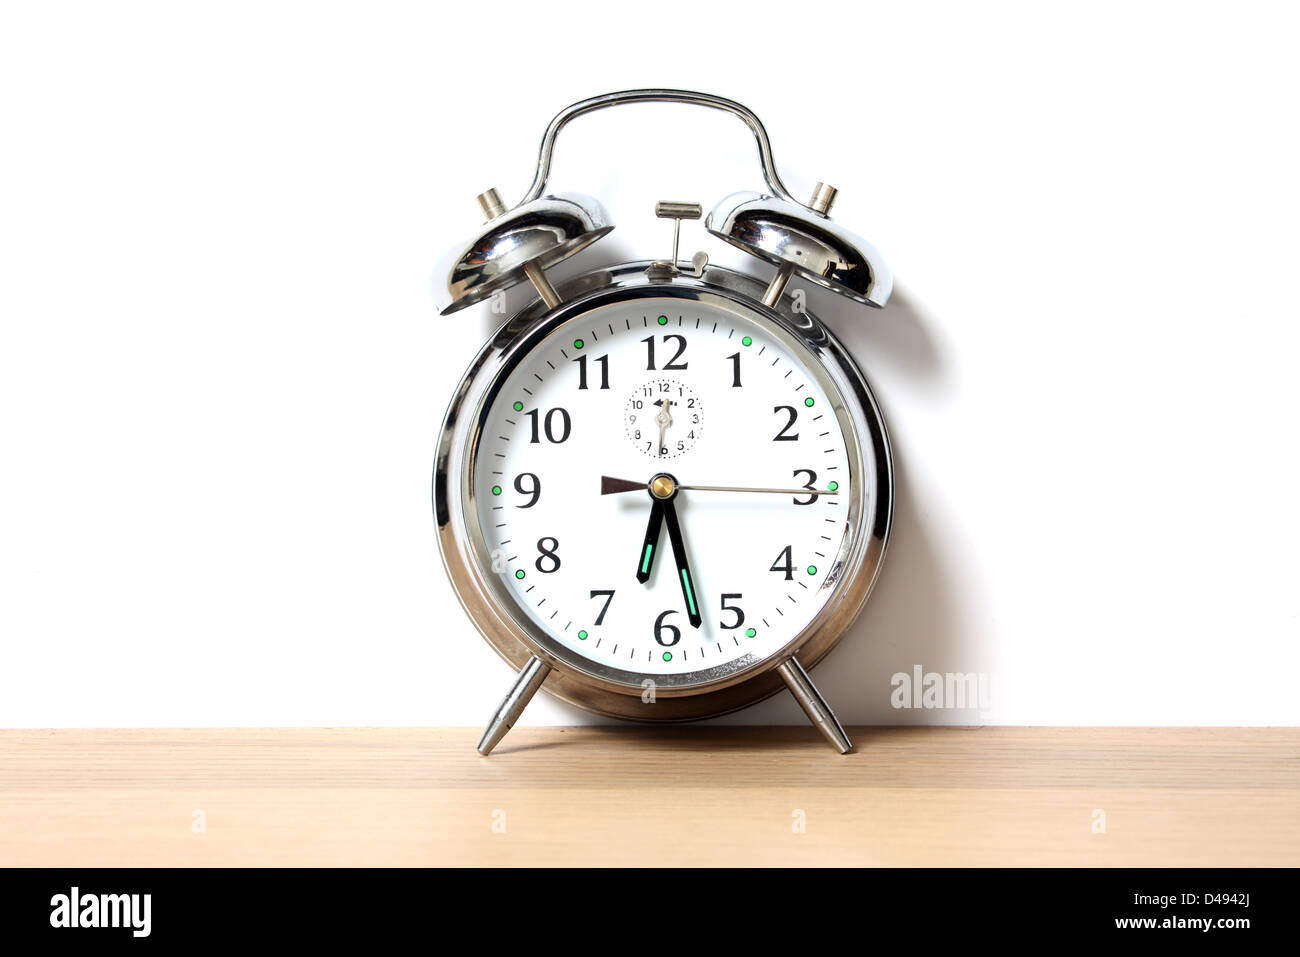 Alarm clock time 6 30 -Fotos und -Bildmaterial in hoher Auflösung – Alamy